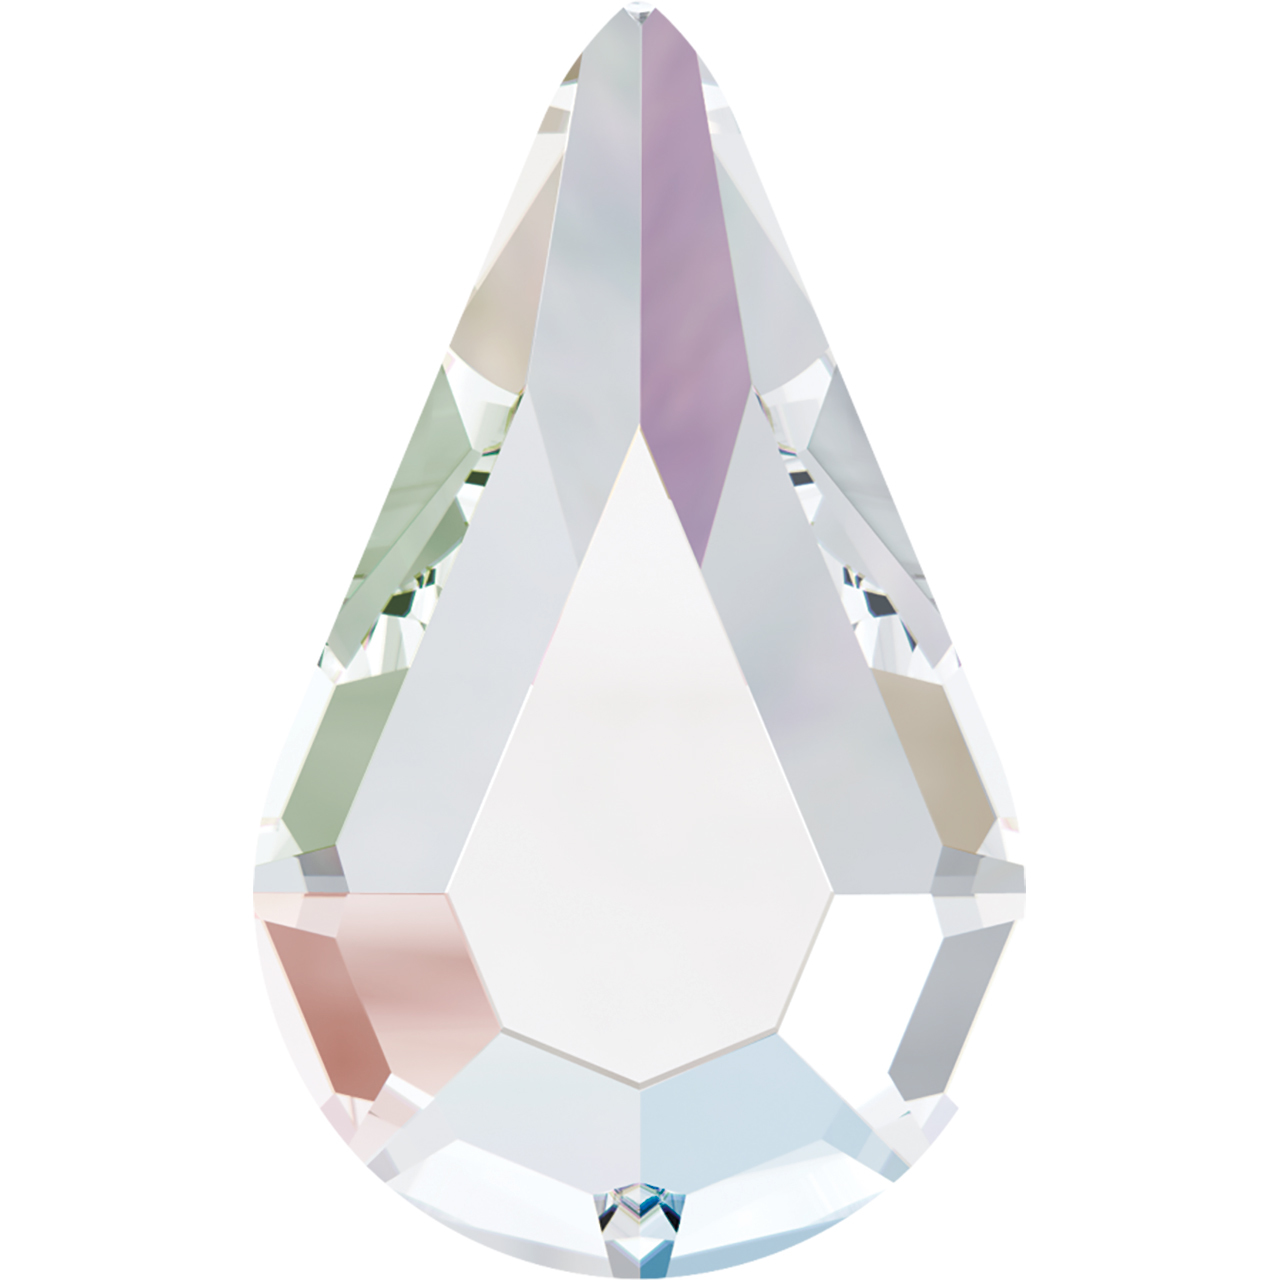 Cristale de Lipit Swarovski, 8x4.8 mm, Culori: Crystal (36 buc/pachet)Cod: 2300